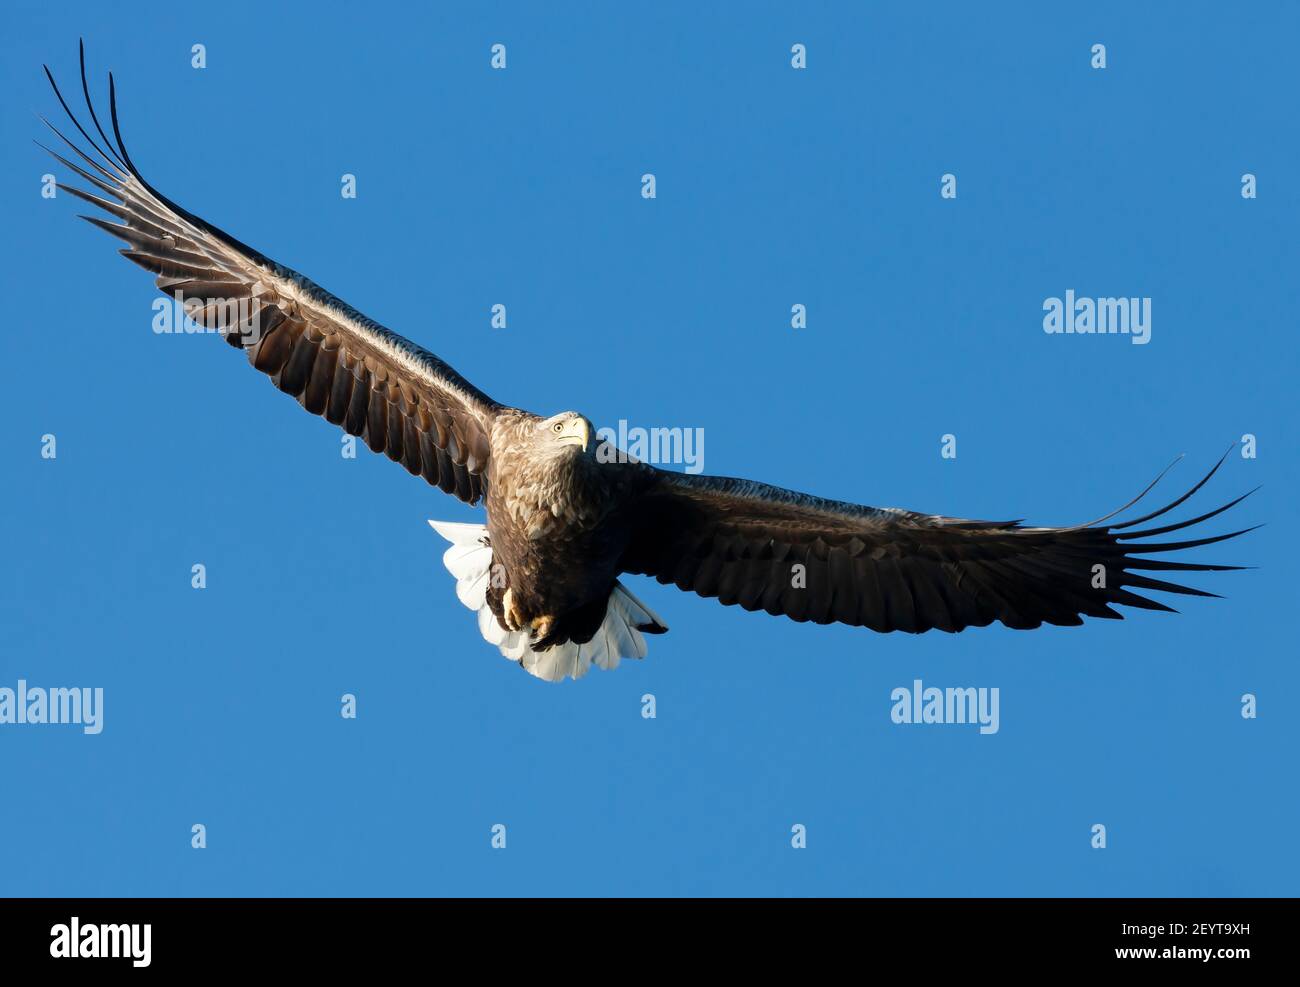 Gros plan d'un aigle de mer à queue blanche (Haliaeetus albicilla) en vol contre le ciel bleu. Banque D'Images